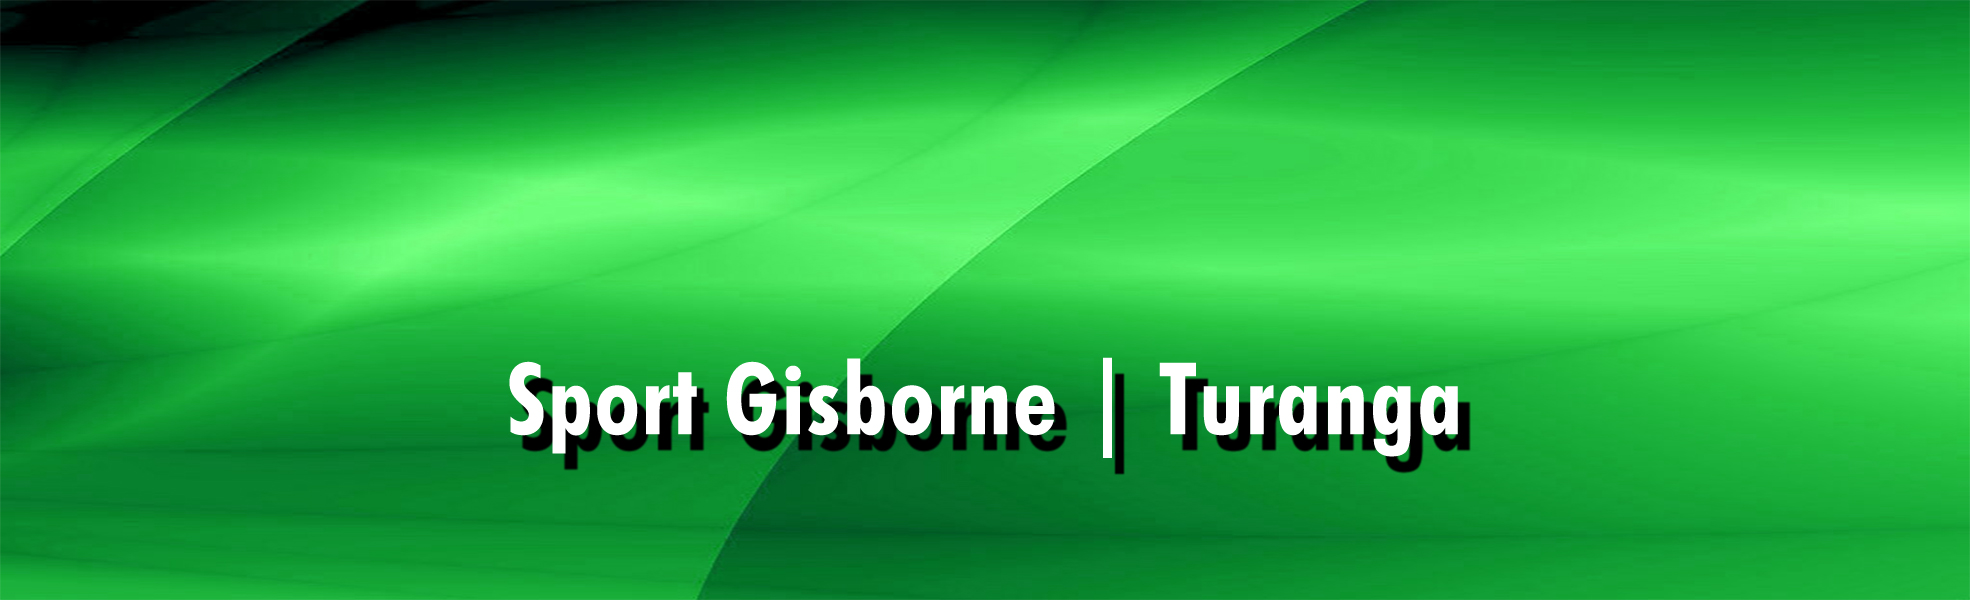 Sport Gisborne Turanga New Zealand